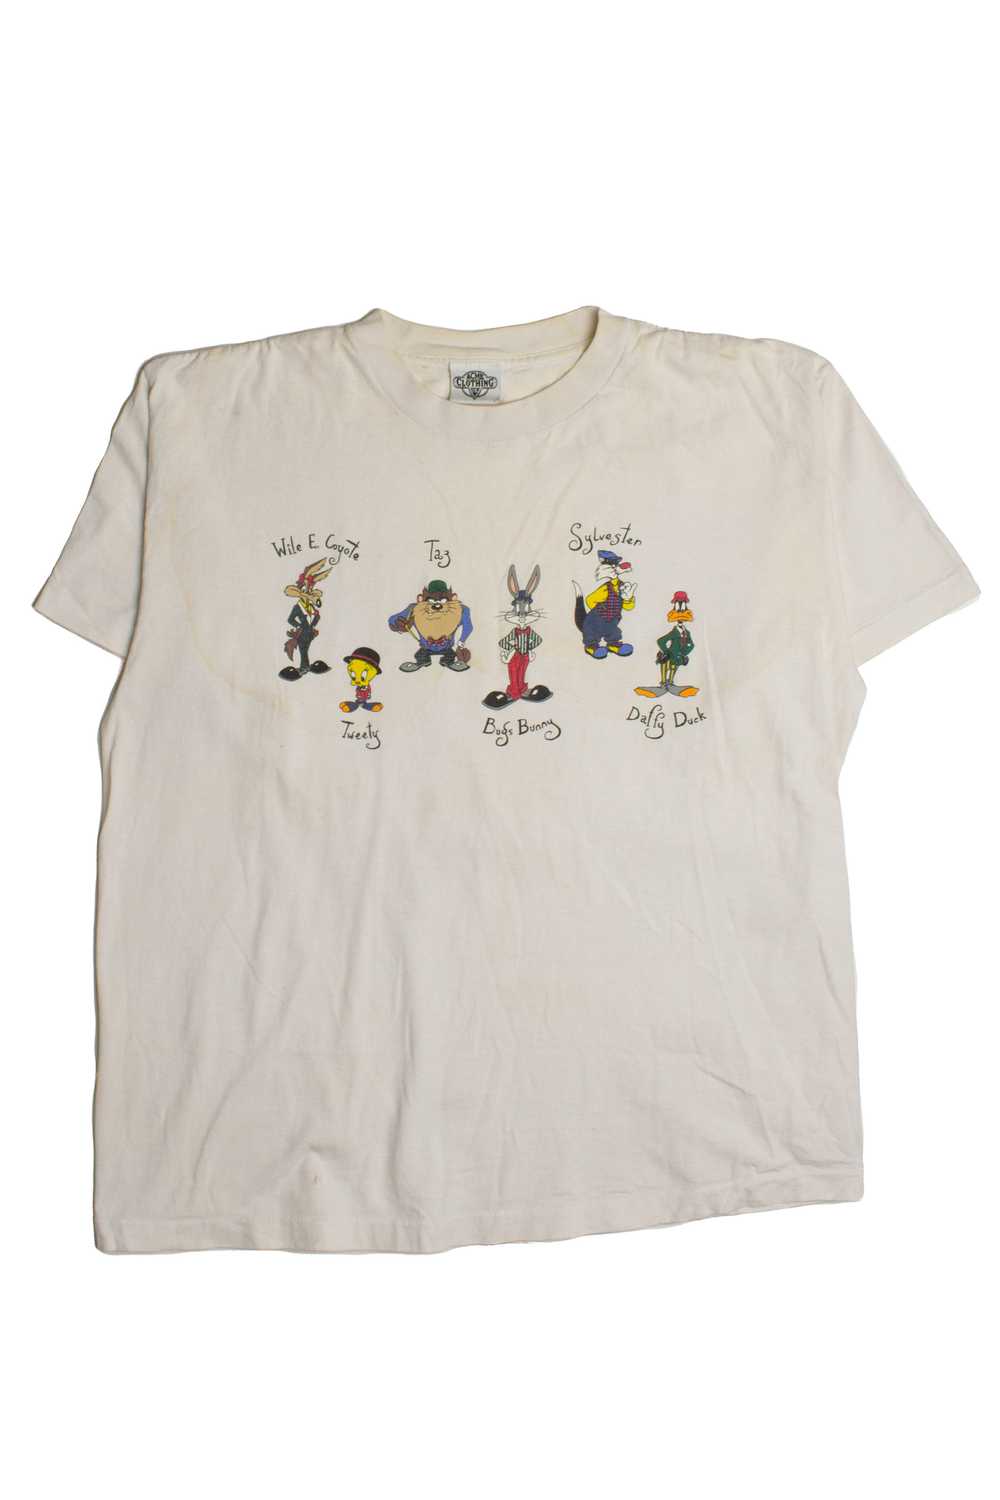 Vintage Looney Tunes Acme T-Shirt (1990s) 8861 - image 1